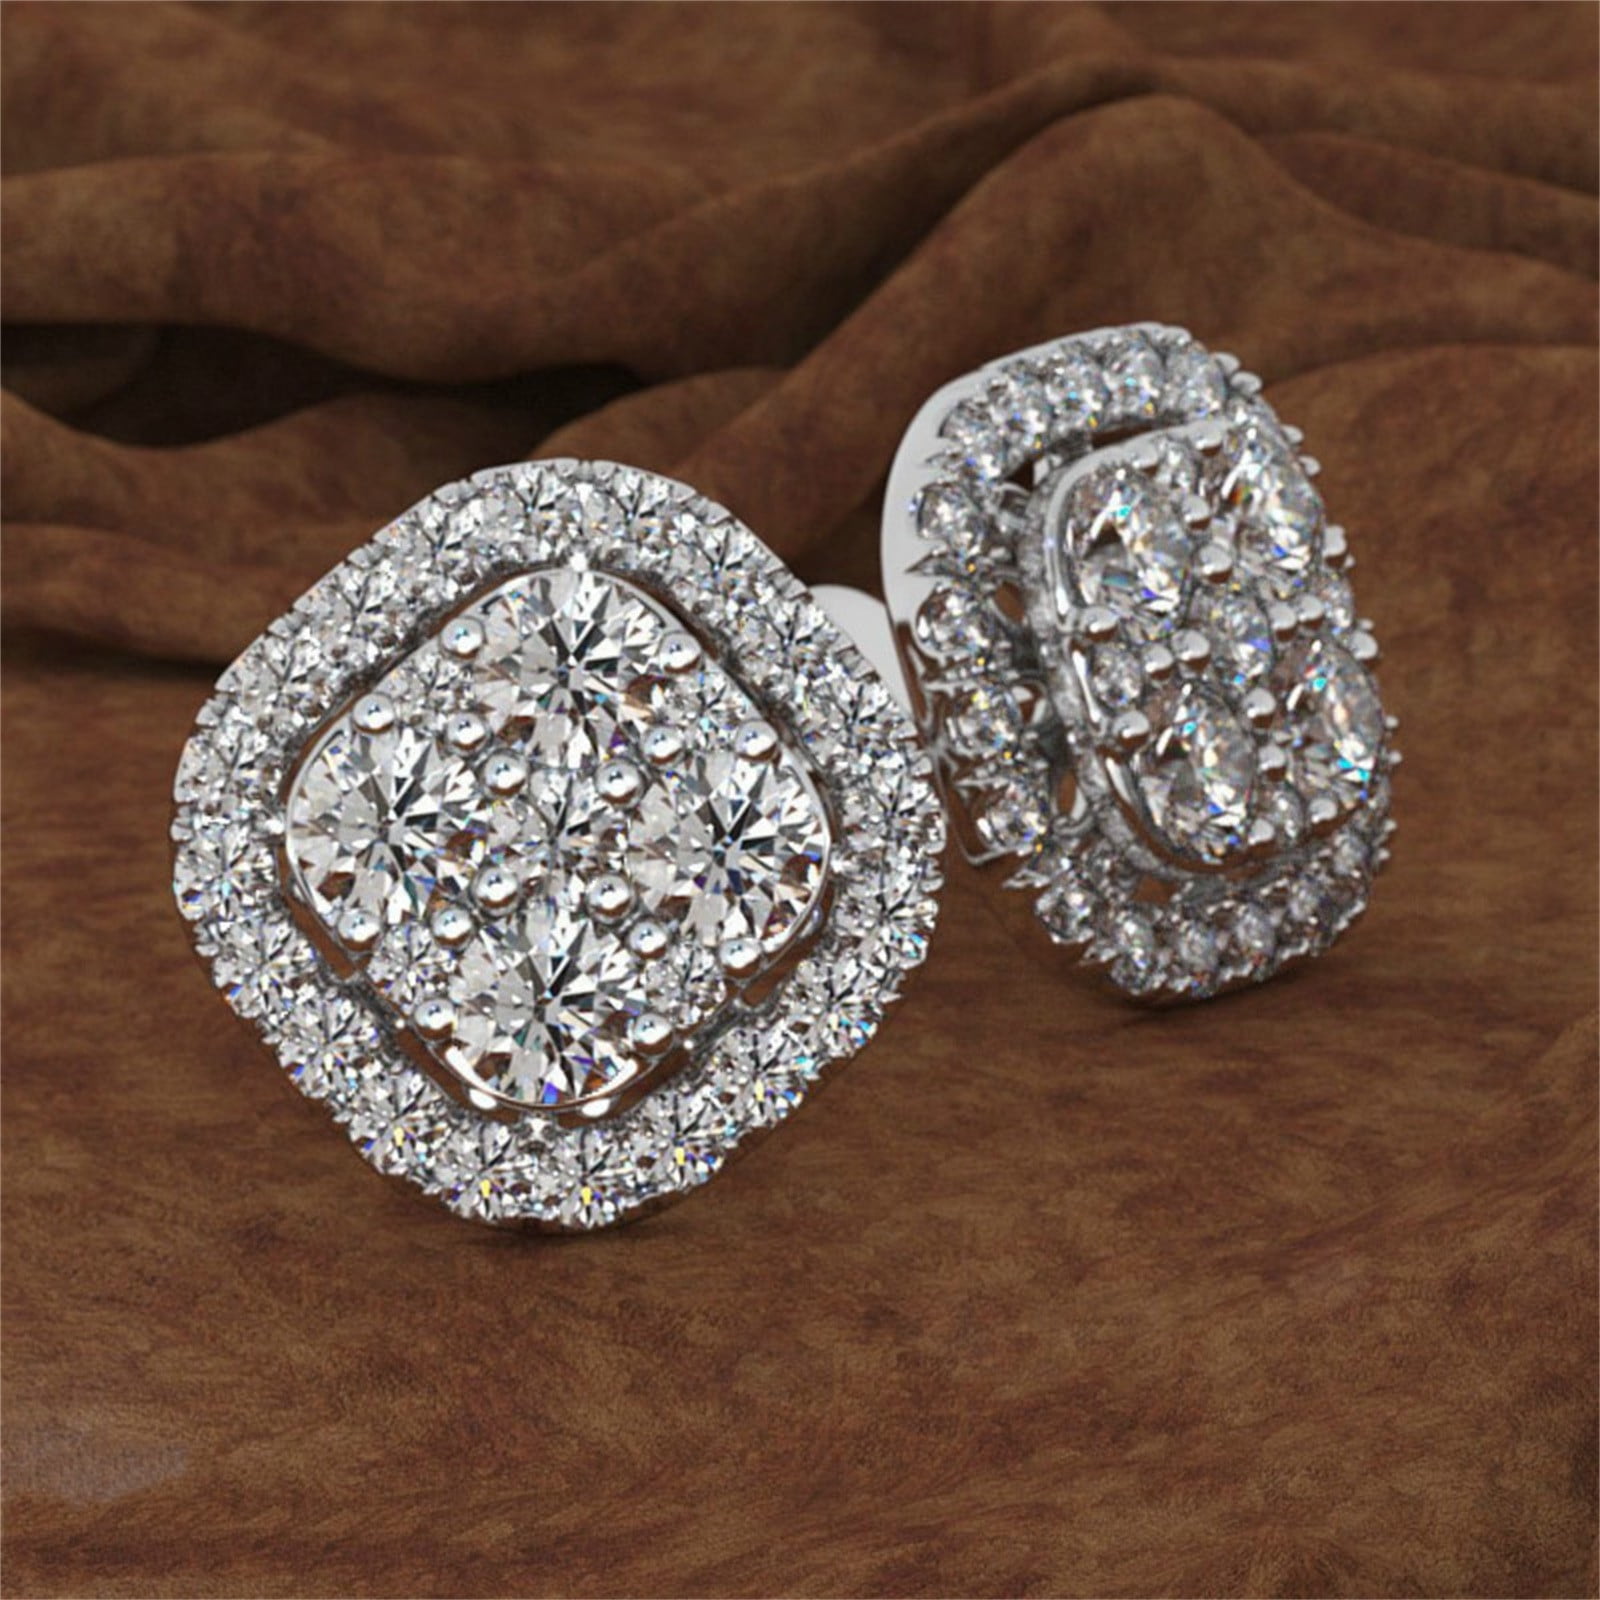 Pave Set Diamond Earrings White Gold | Carriage Diamonds